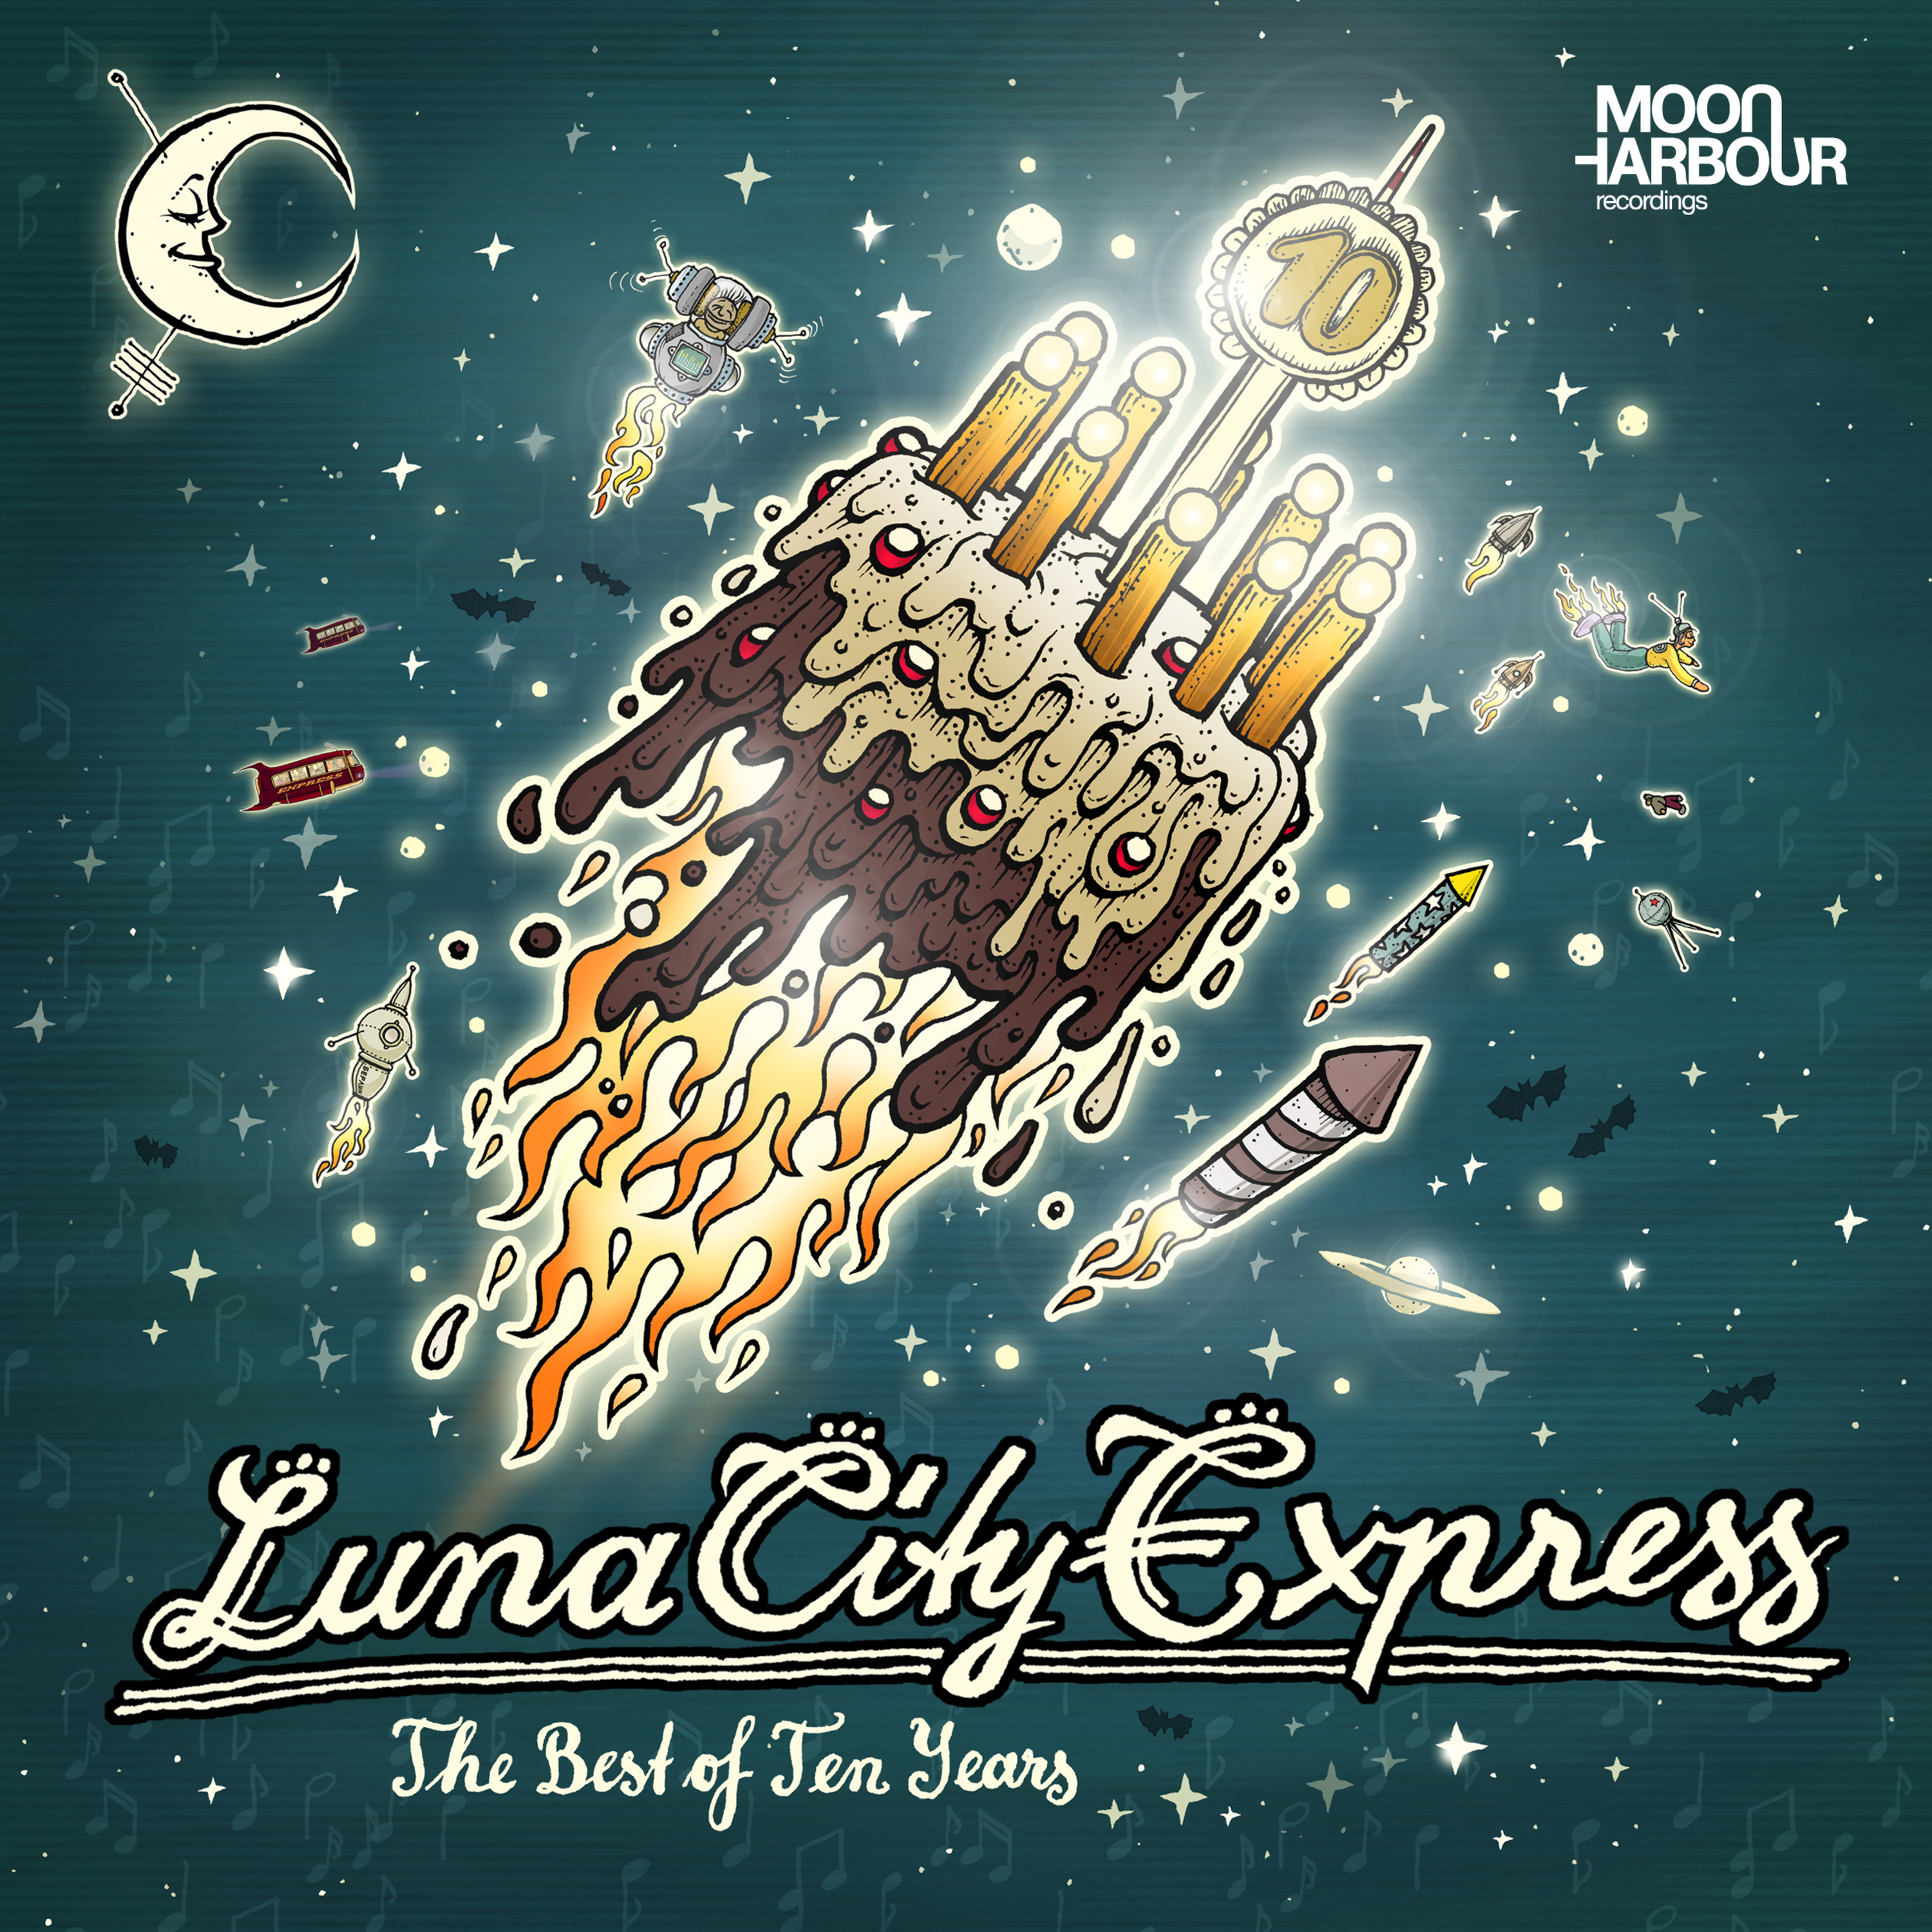 Who Stole the Soul? (Luna City Express Remix)